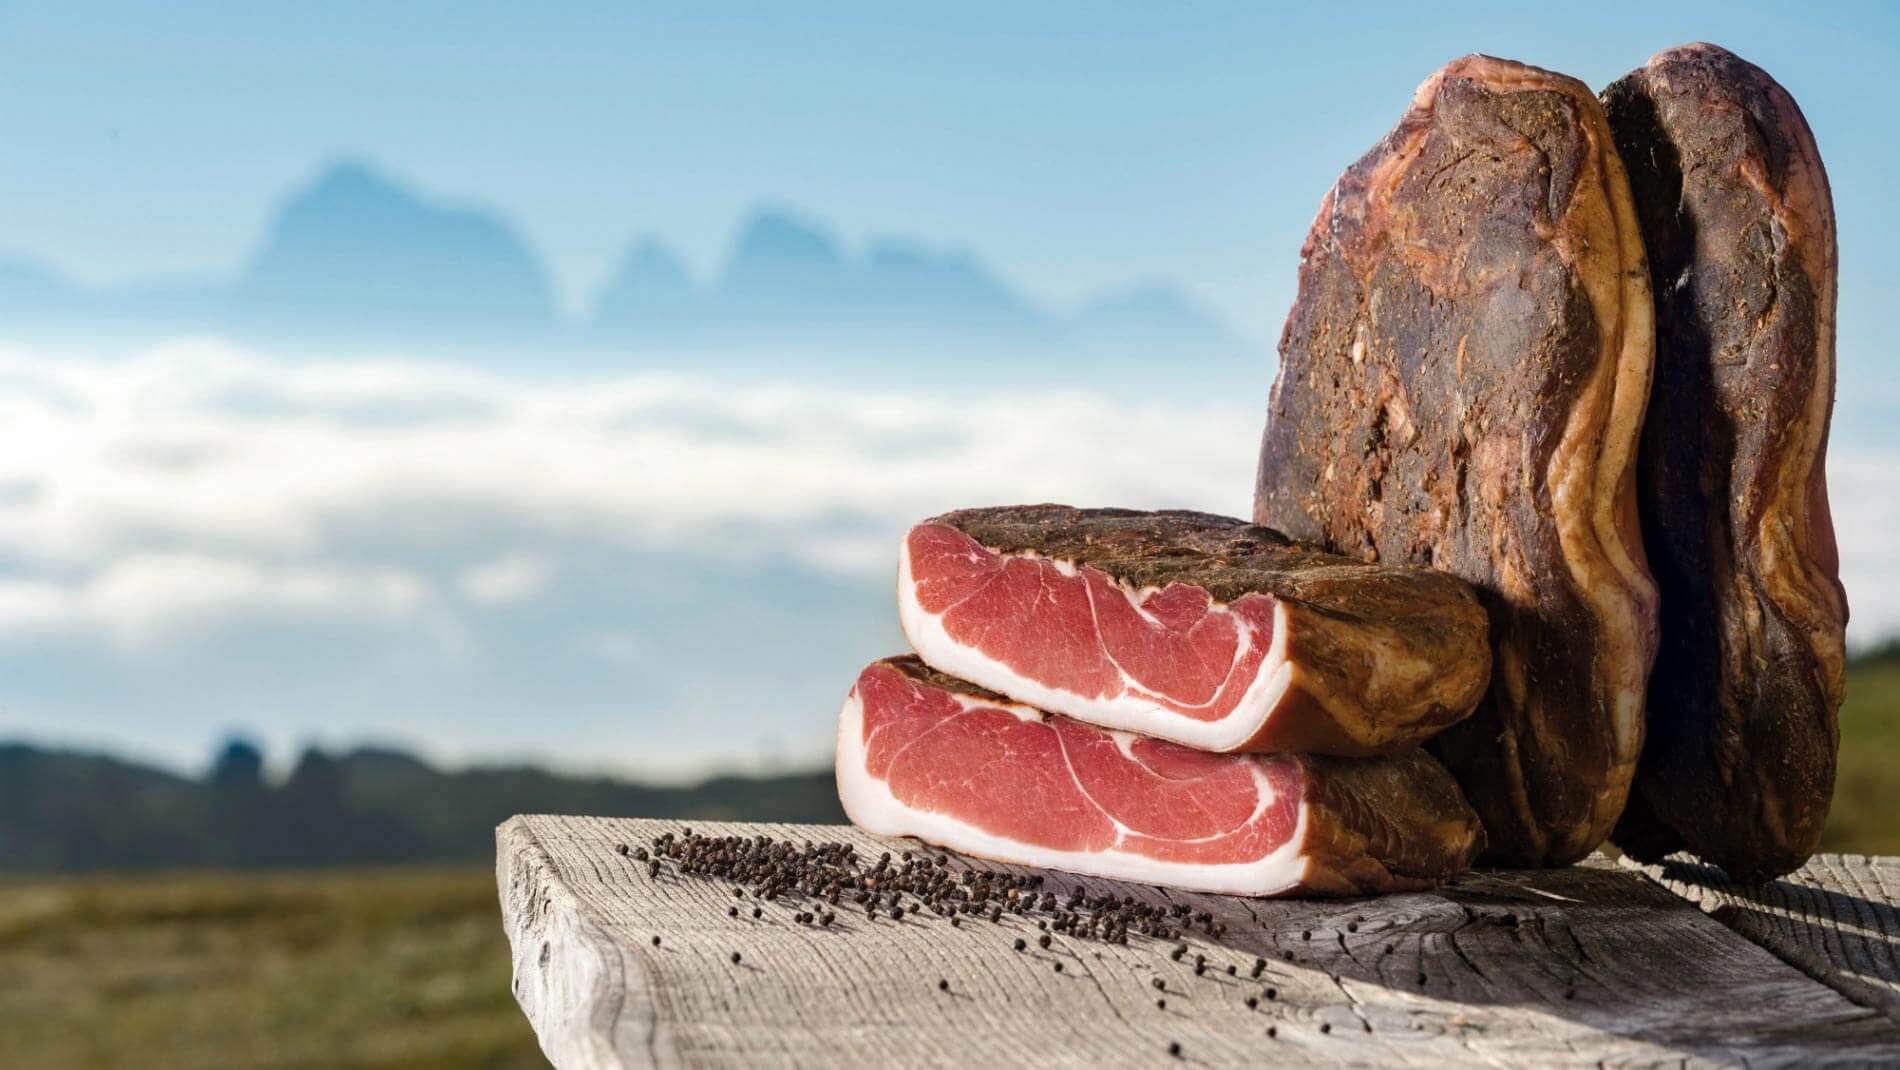 / Alto South – Speck Bacon Original Adige Tyrolean PGI Speck